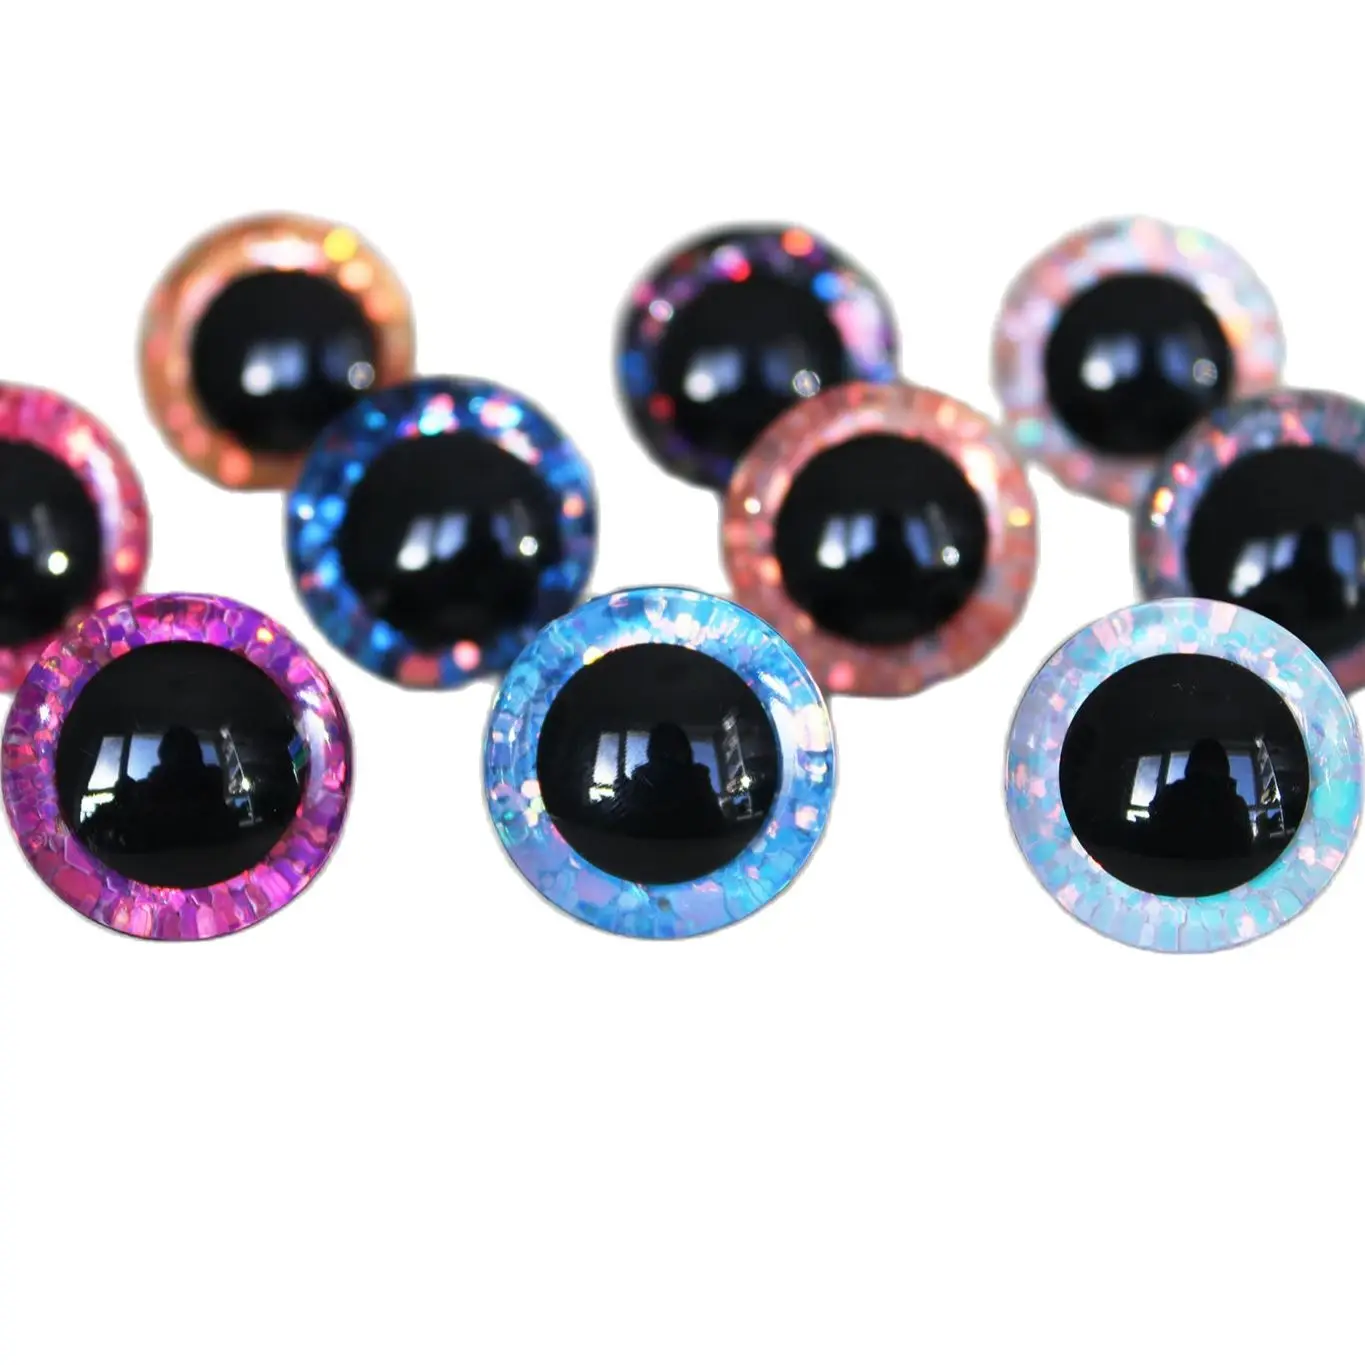 Big Size Round Clear Amigurumi Plastic Safety Eyes--30/24mm Each Size  10pairs - Dolls Accessories - AliExpress